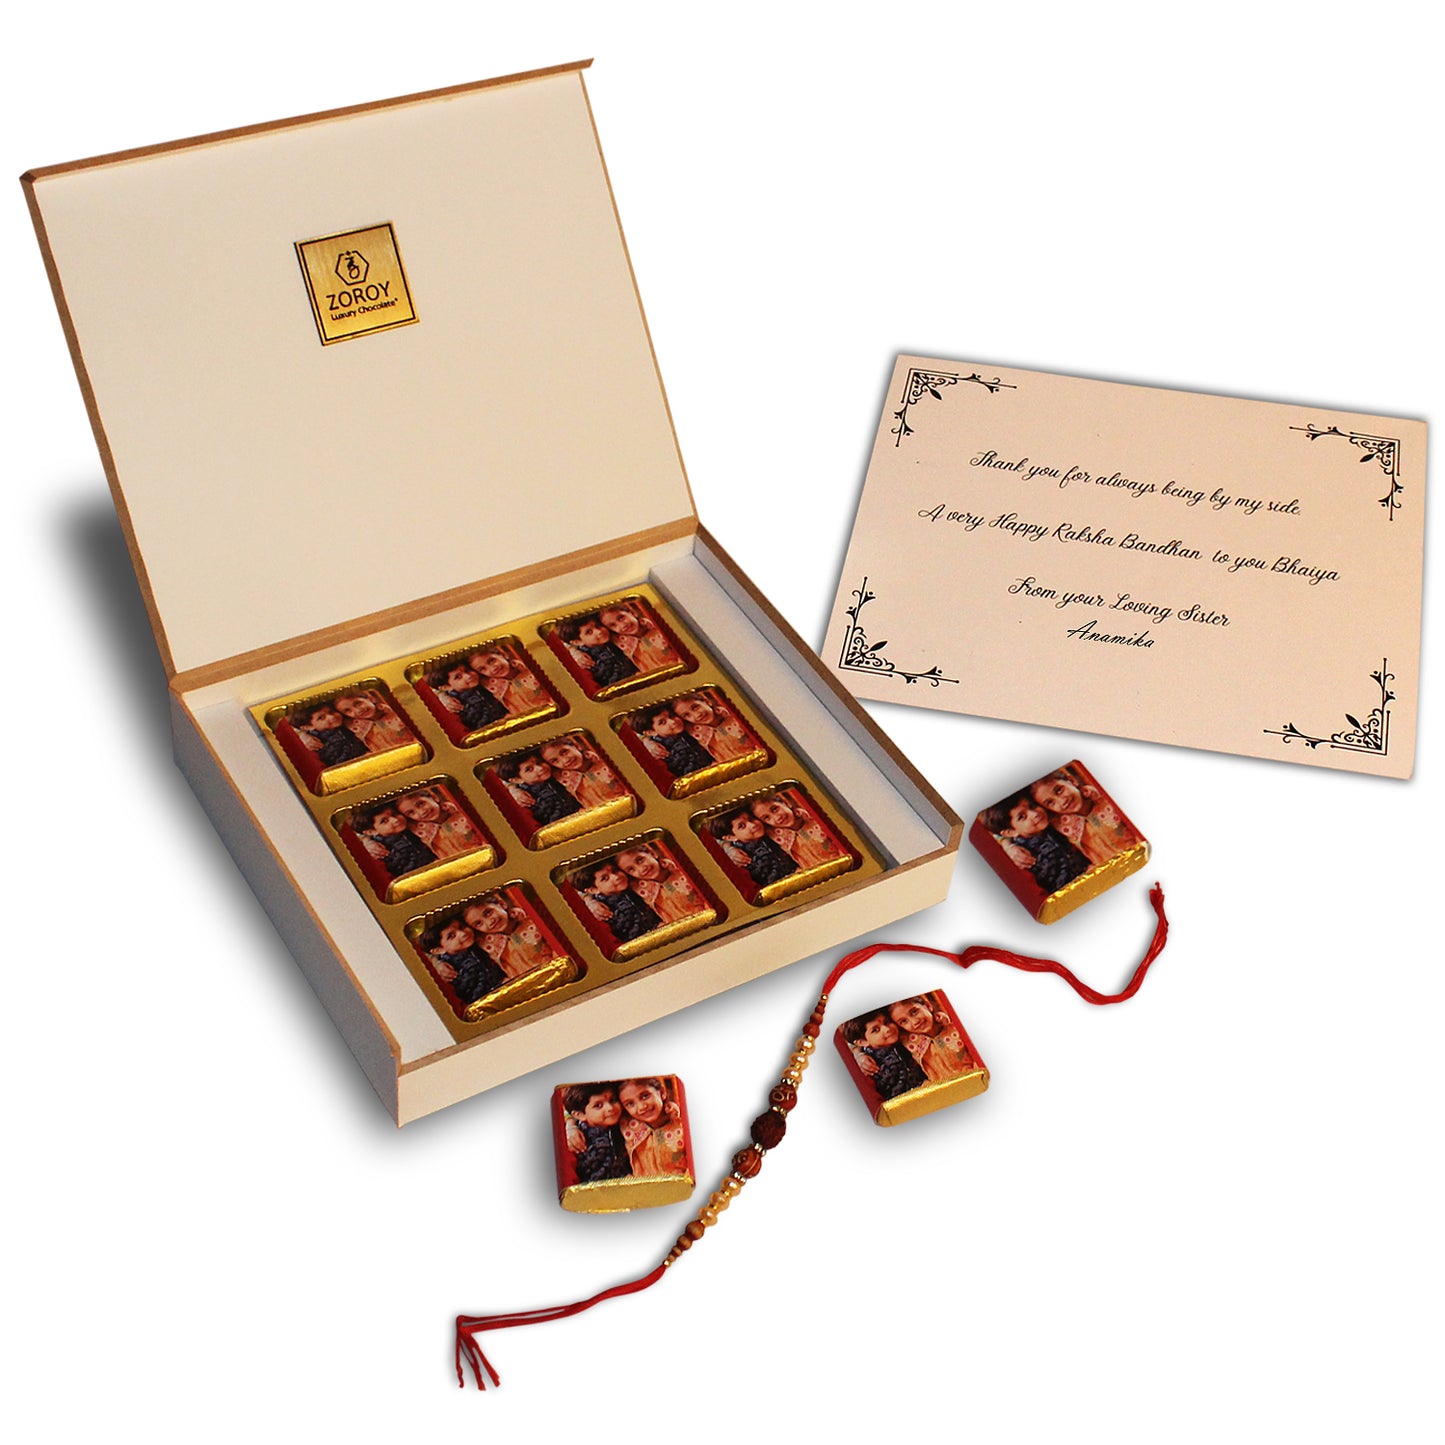 ZOROY - Elegant Rakhi Gift for Brother & Sister - Personalized Gift Box and Wrapped Chocolates - 9 Wrapped Chocolates